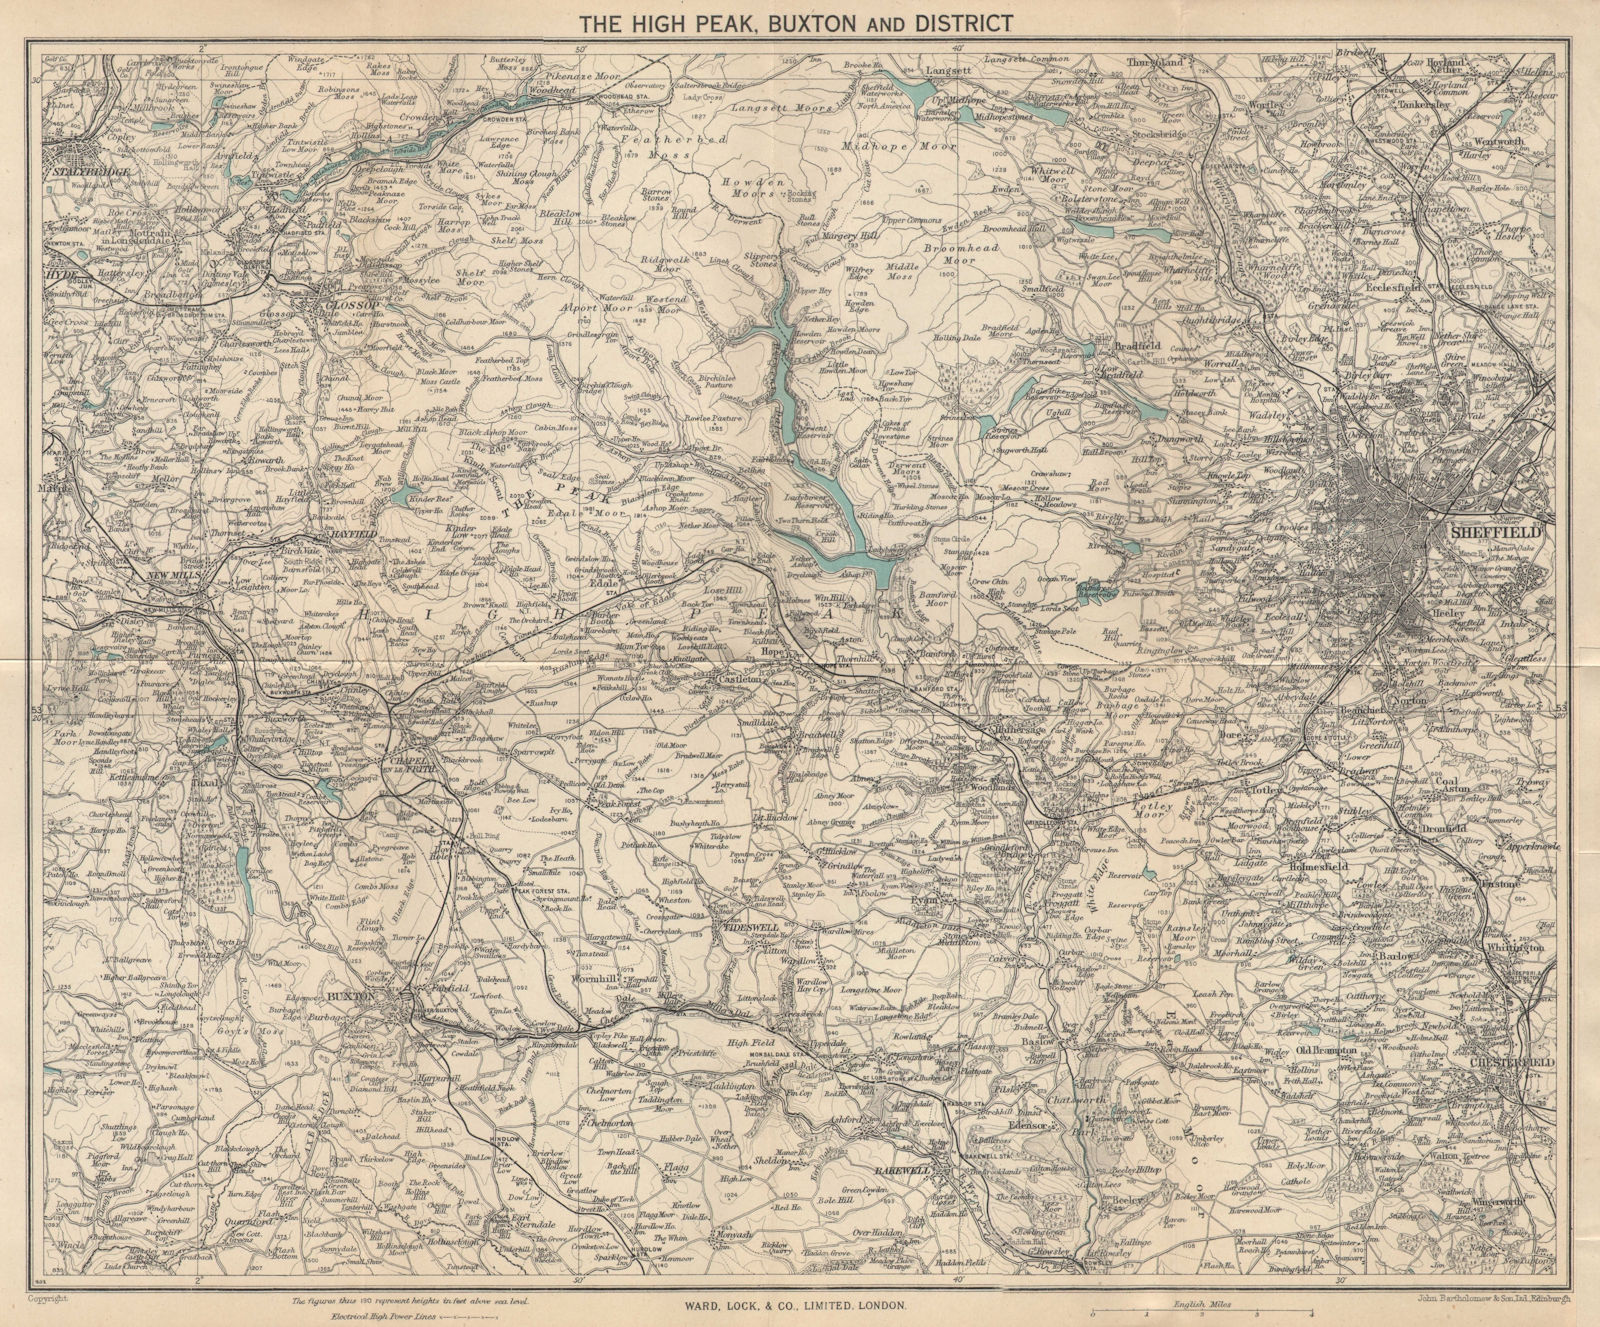 PEAK DISTRICT NORTH. High Peak Buxton Sheffield Glossop Derbyshire 1950 map